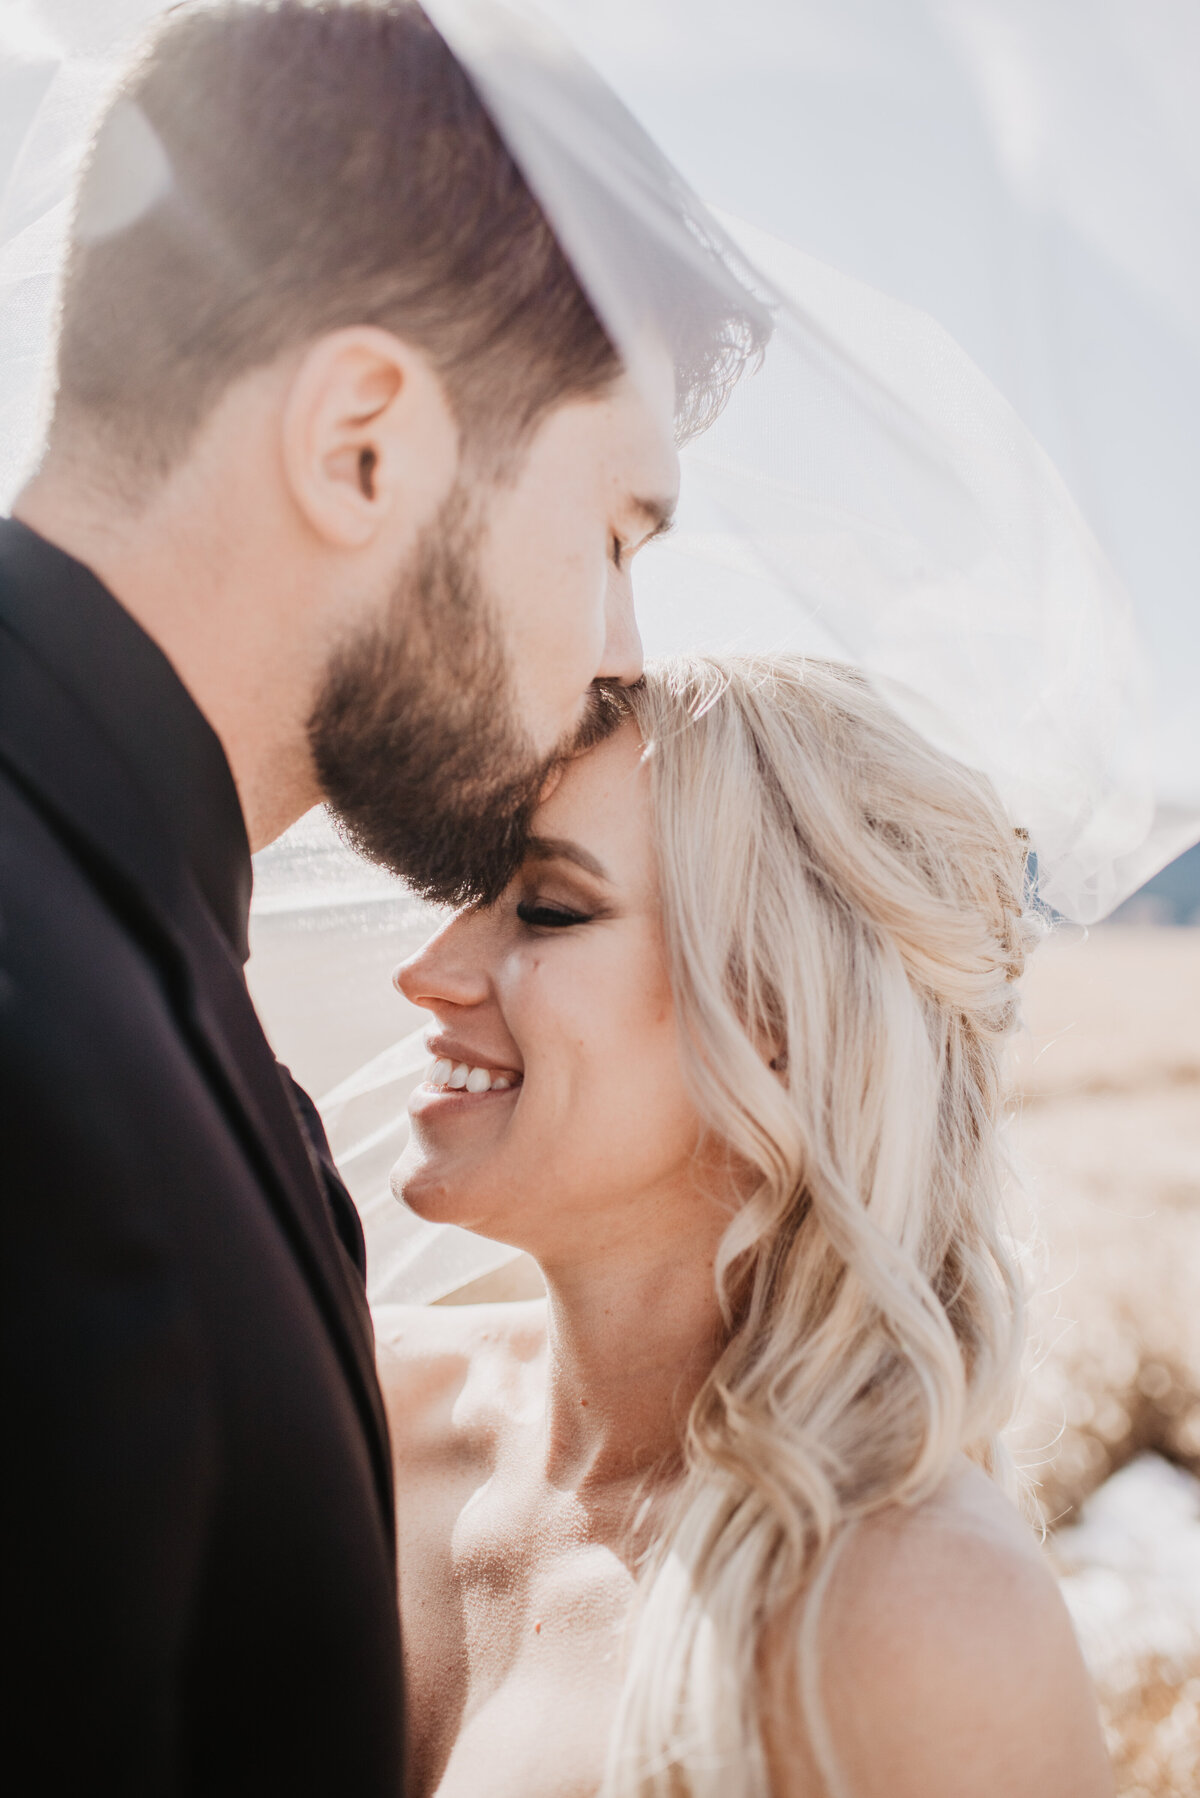 Jackson Hole Photographers capture groom kissing bride's forehead under veil